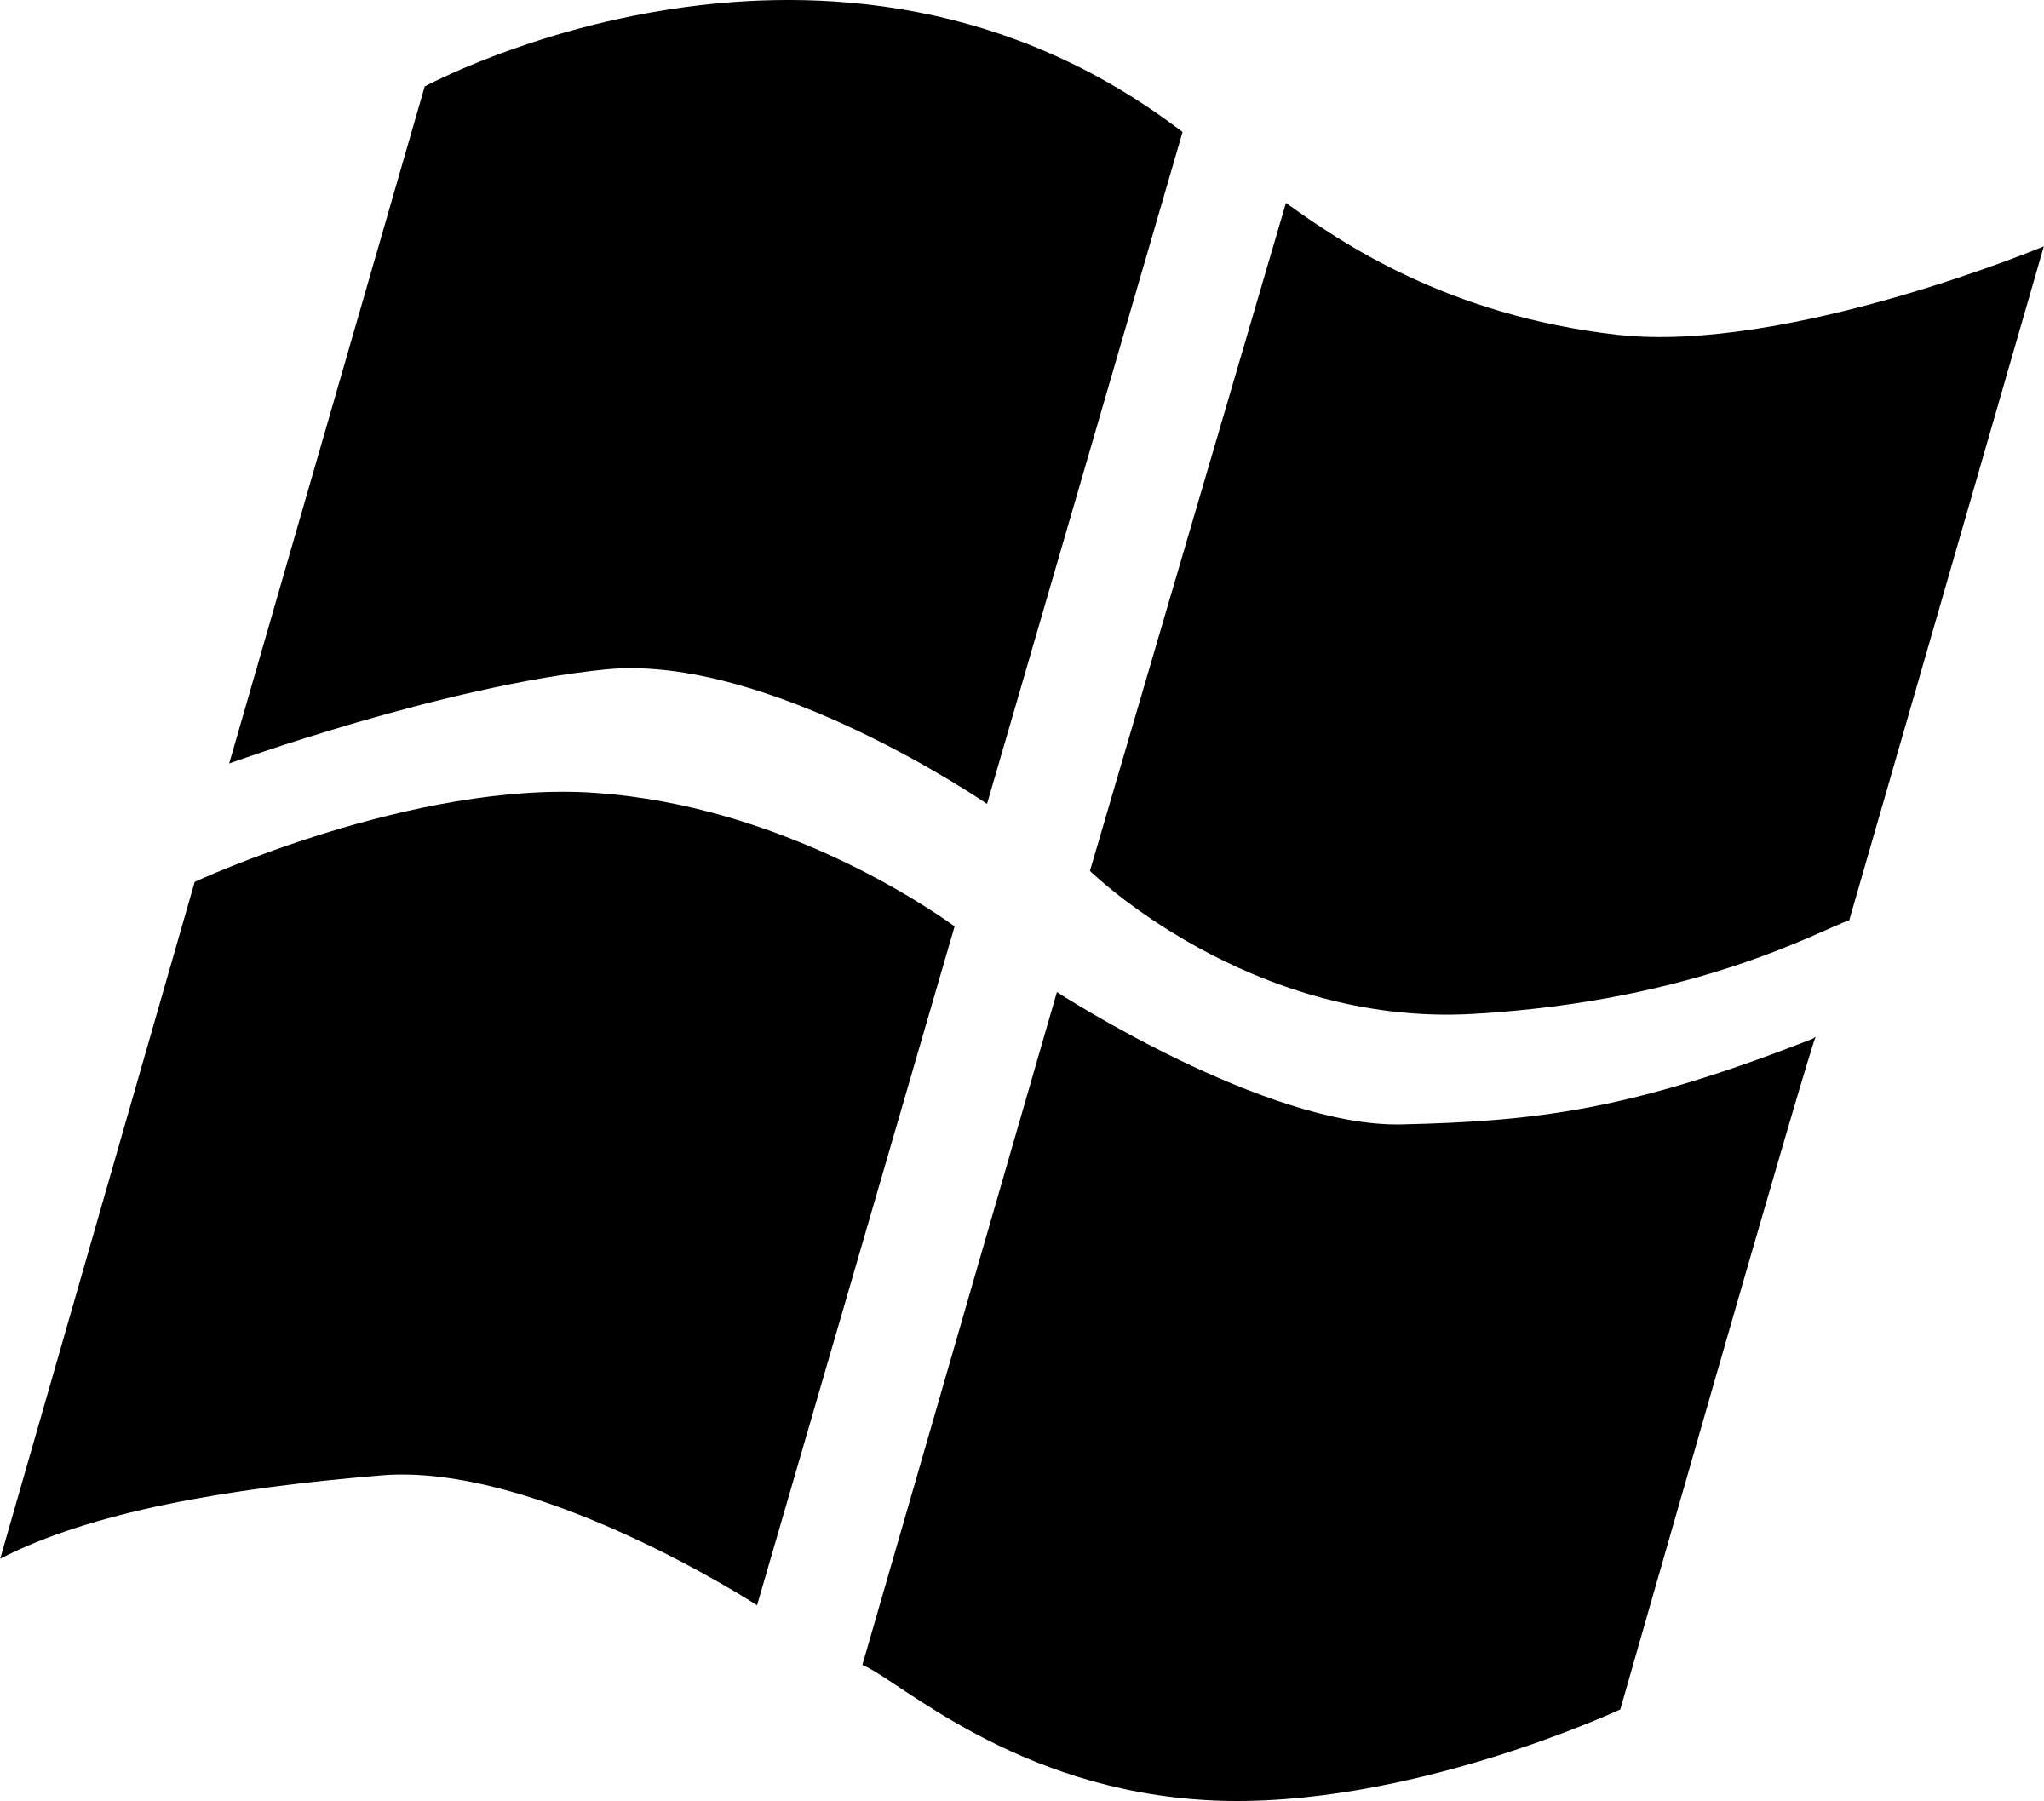 Windows Logo PNG Image in Transparent - Windows Logo Png